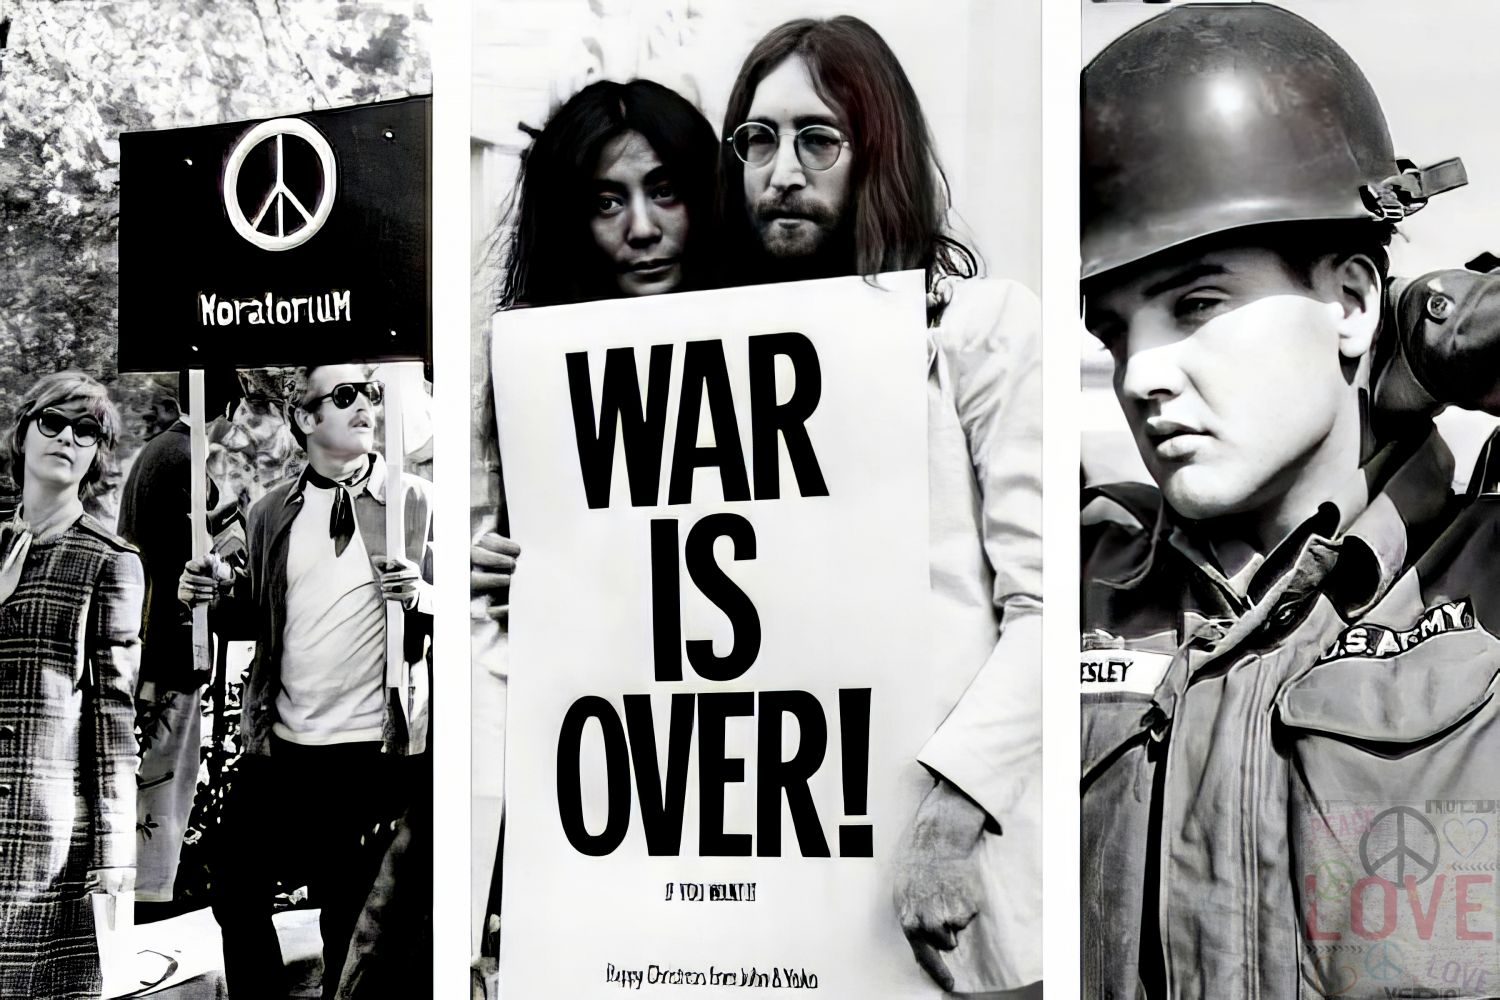 Vietnam War met with opposition from peace-loving hippiesblob:https://hippi.in